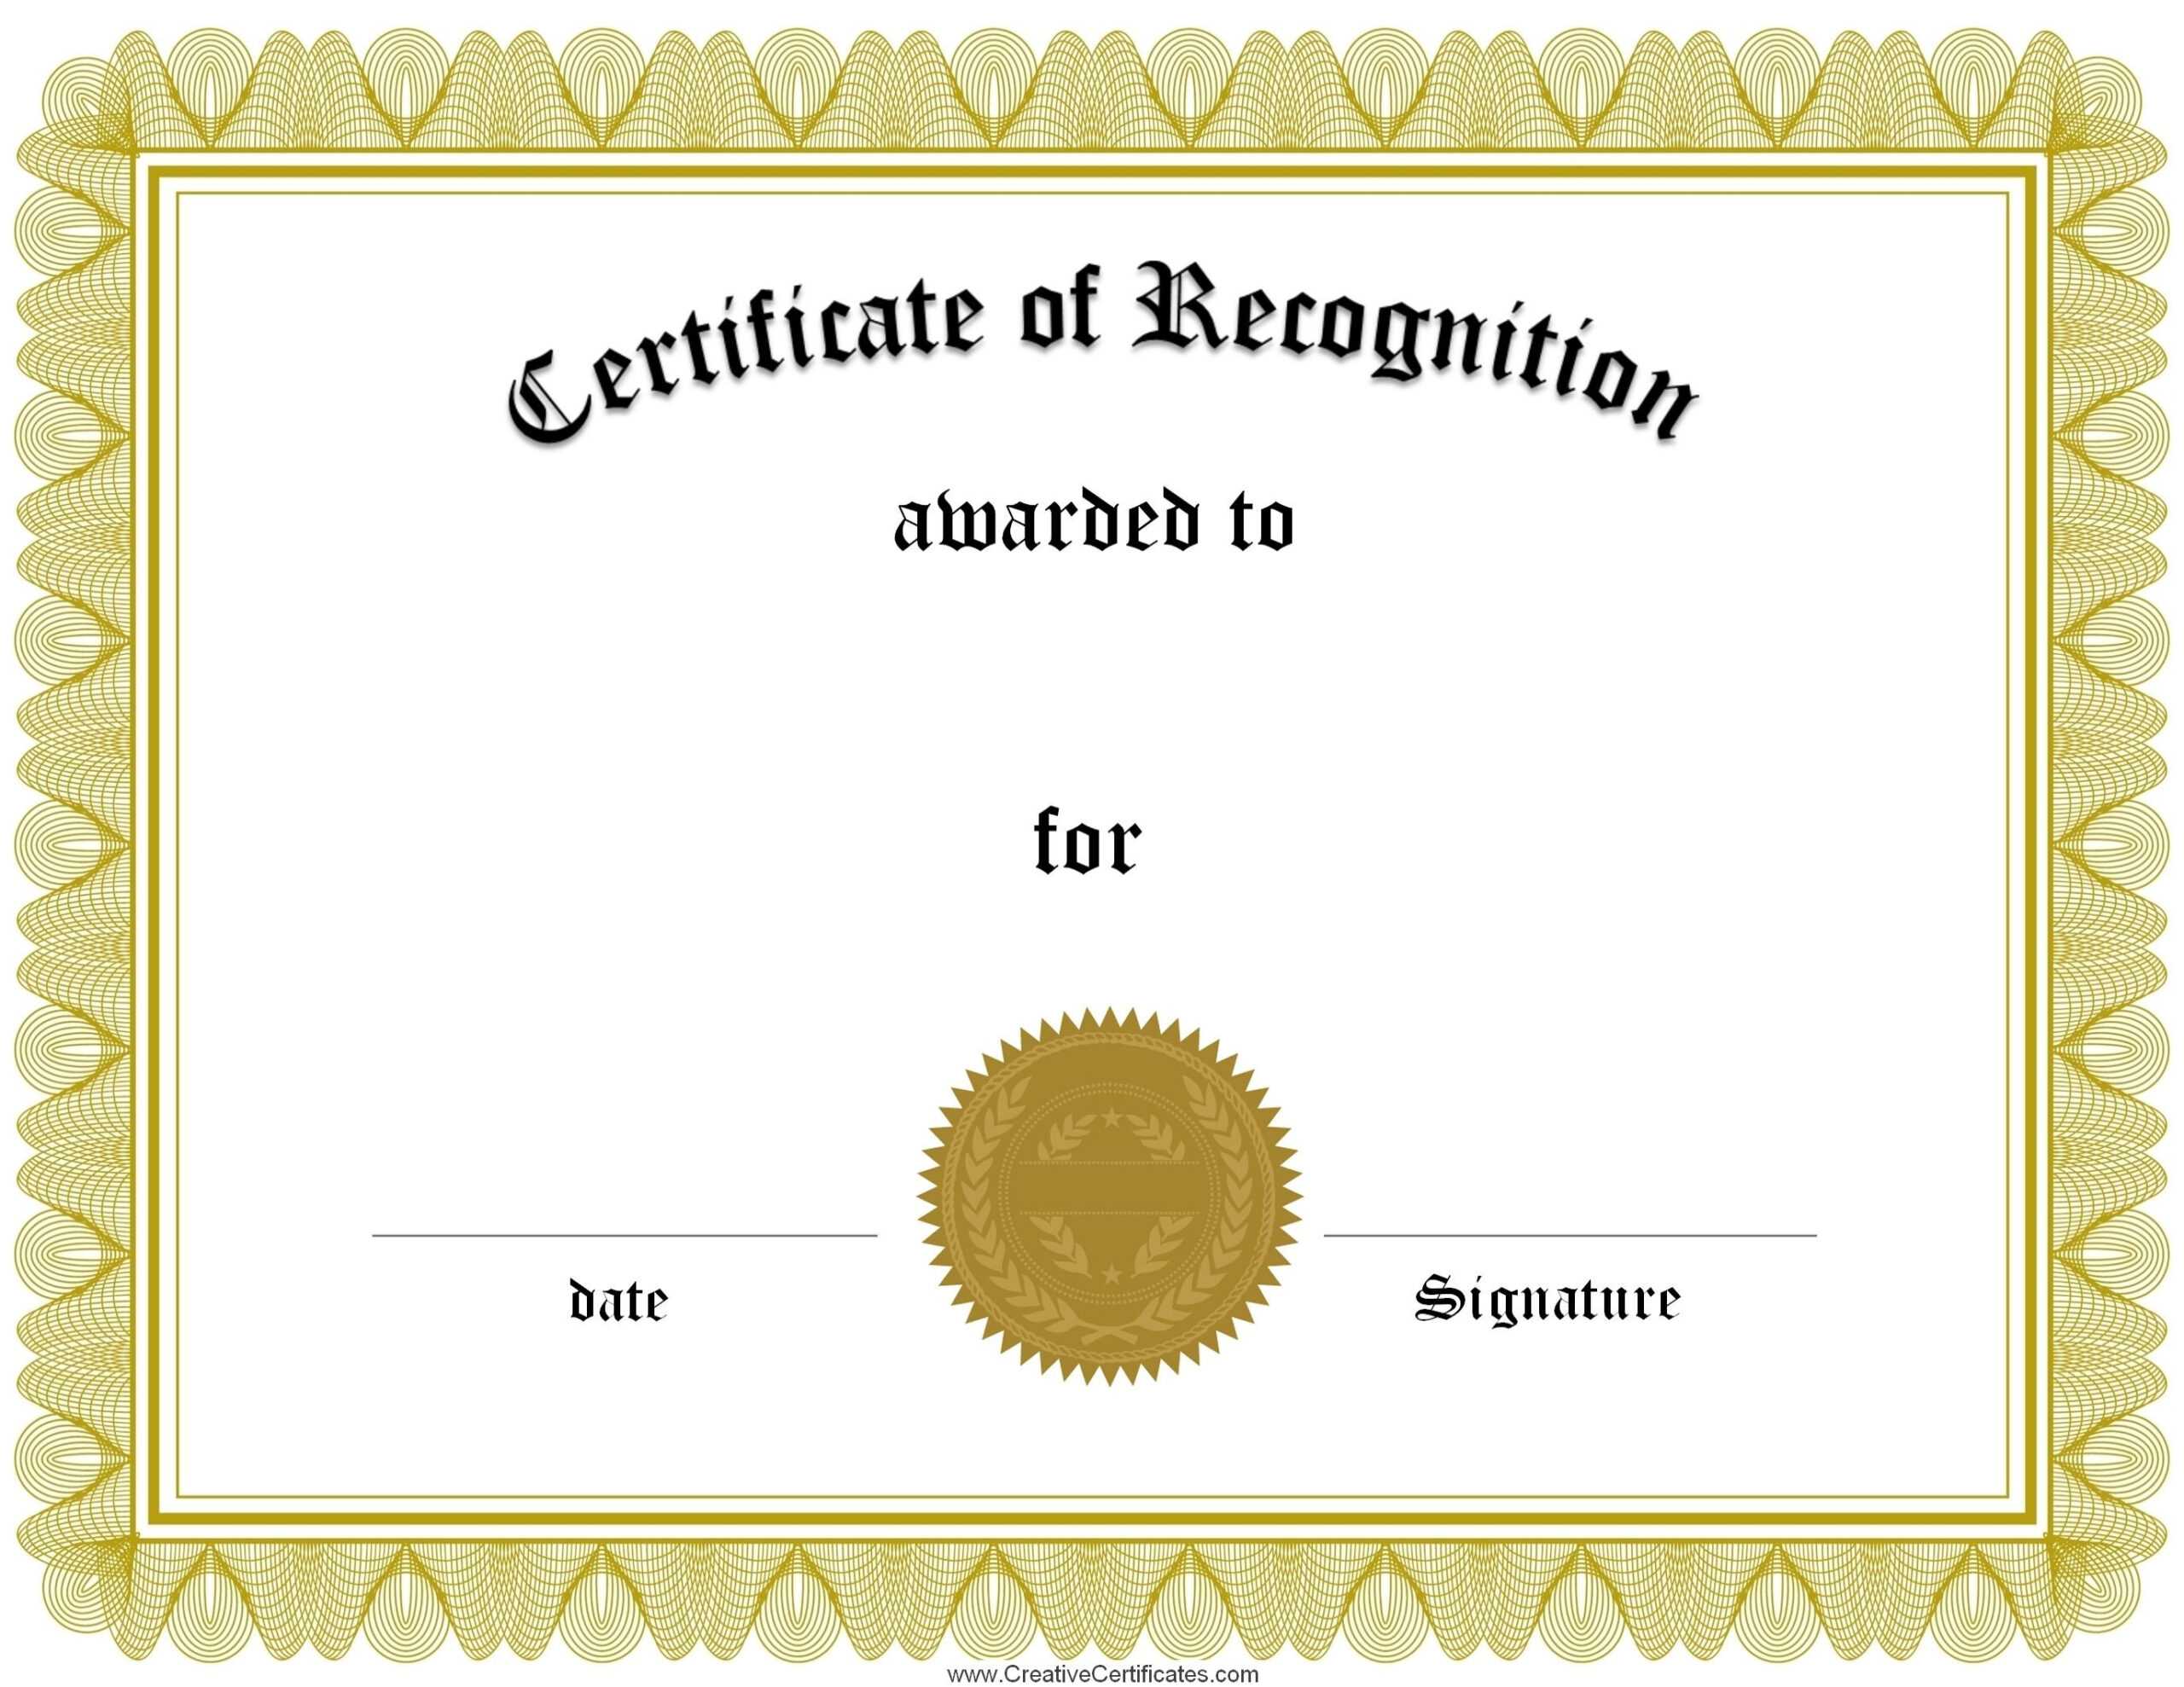 Certificates. Inspiring Recognition Certificate Template Regarding Template For Recognition Certificate